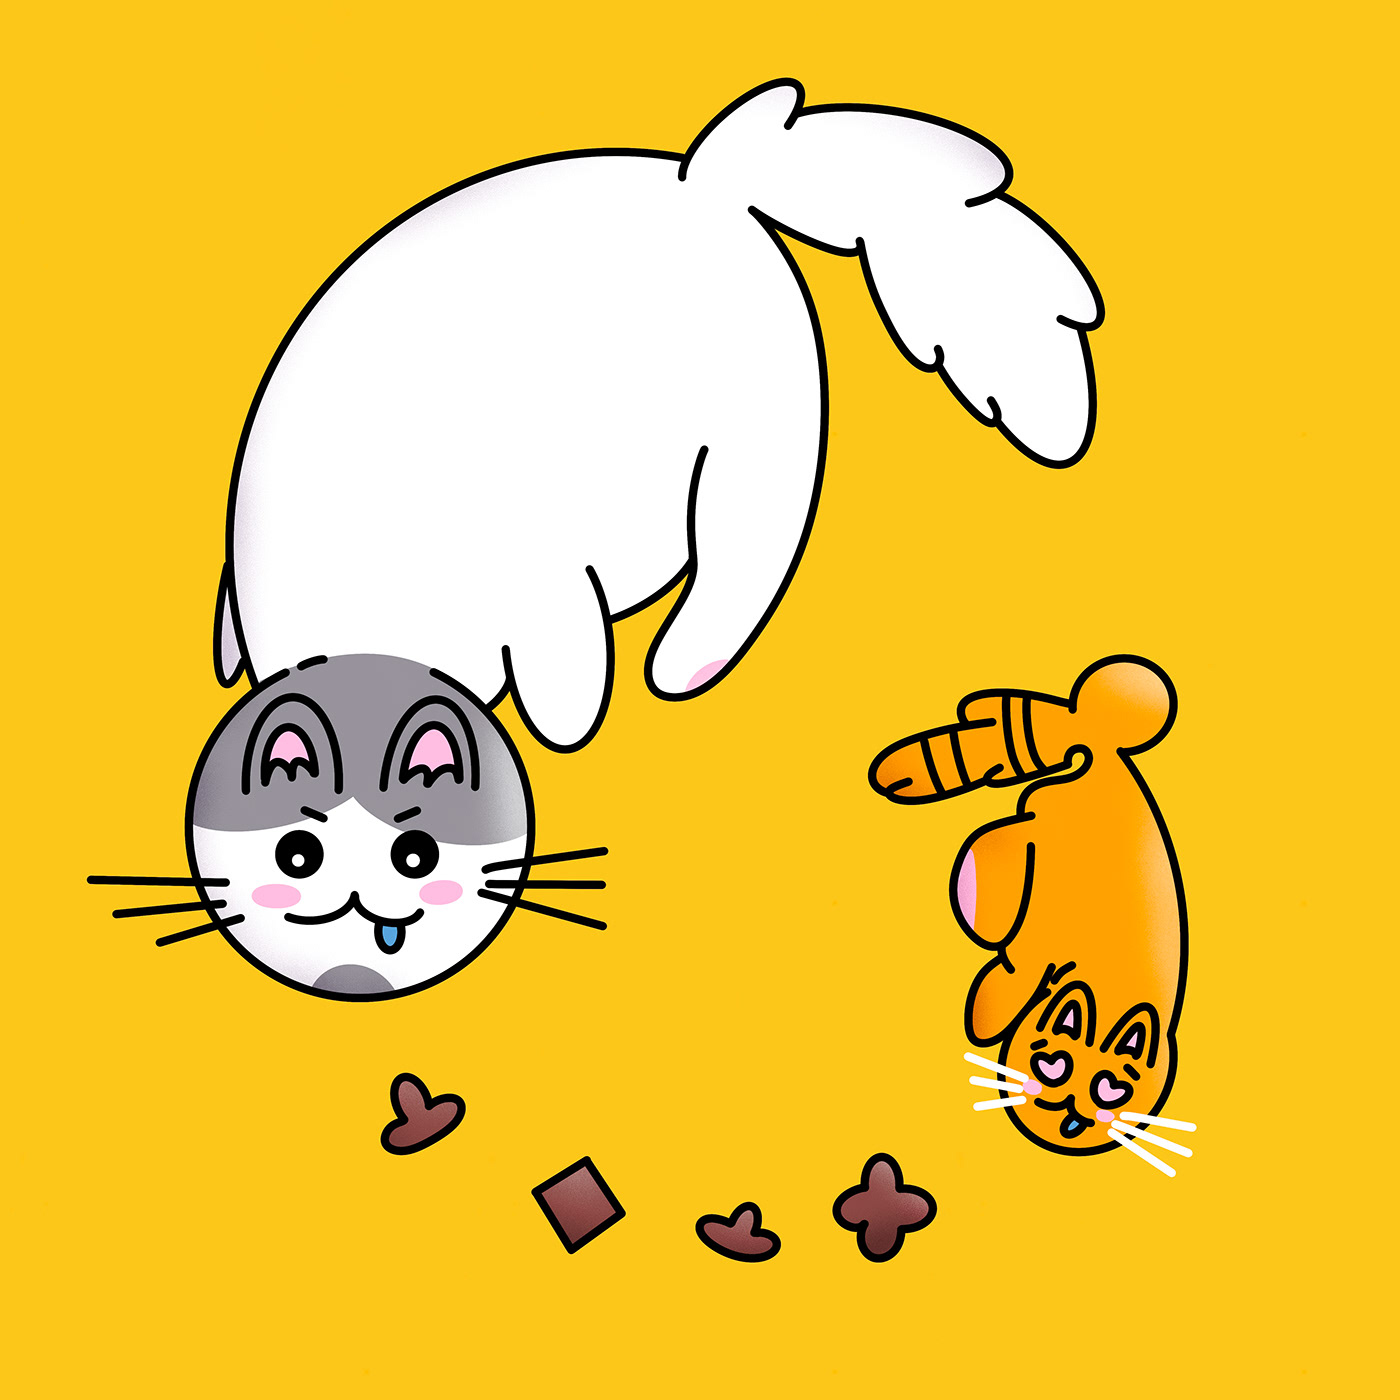 36daysoftype kawaii kawaii illustration Procreate photoshop cats cute illustration